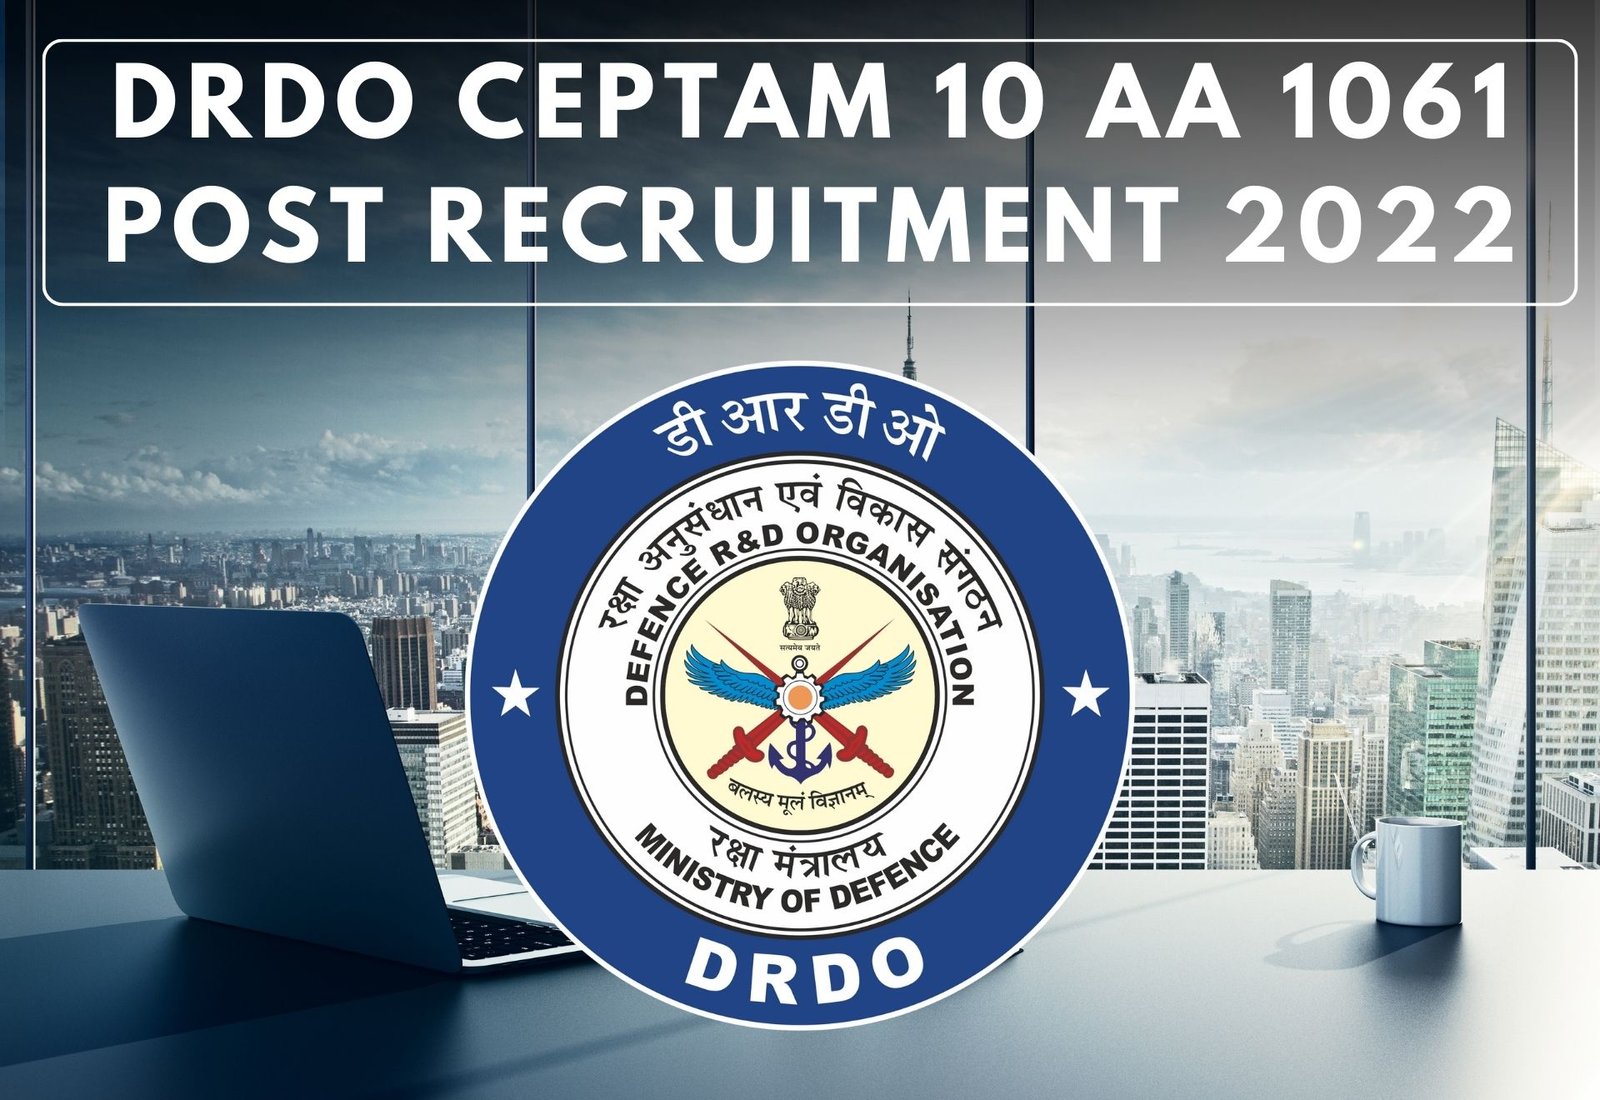 DRDO CEPTAM 10 AA Recruitment Form 2022 | Stenographer, Driver, Security Assistant Vacancy